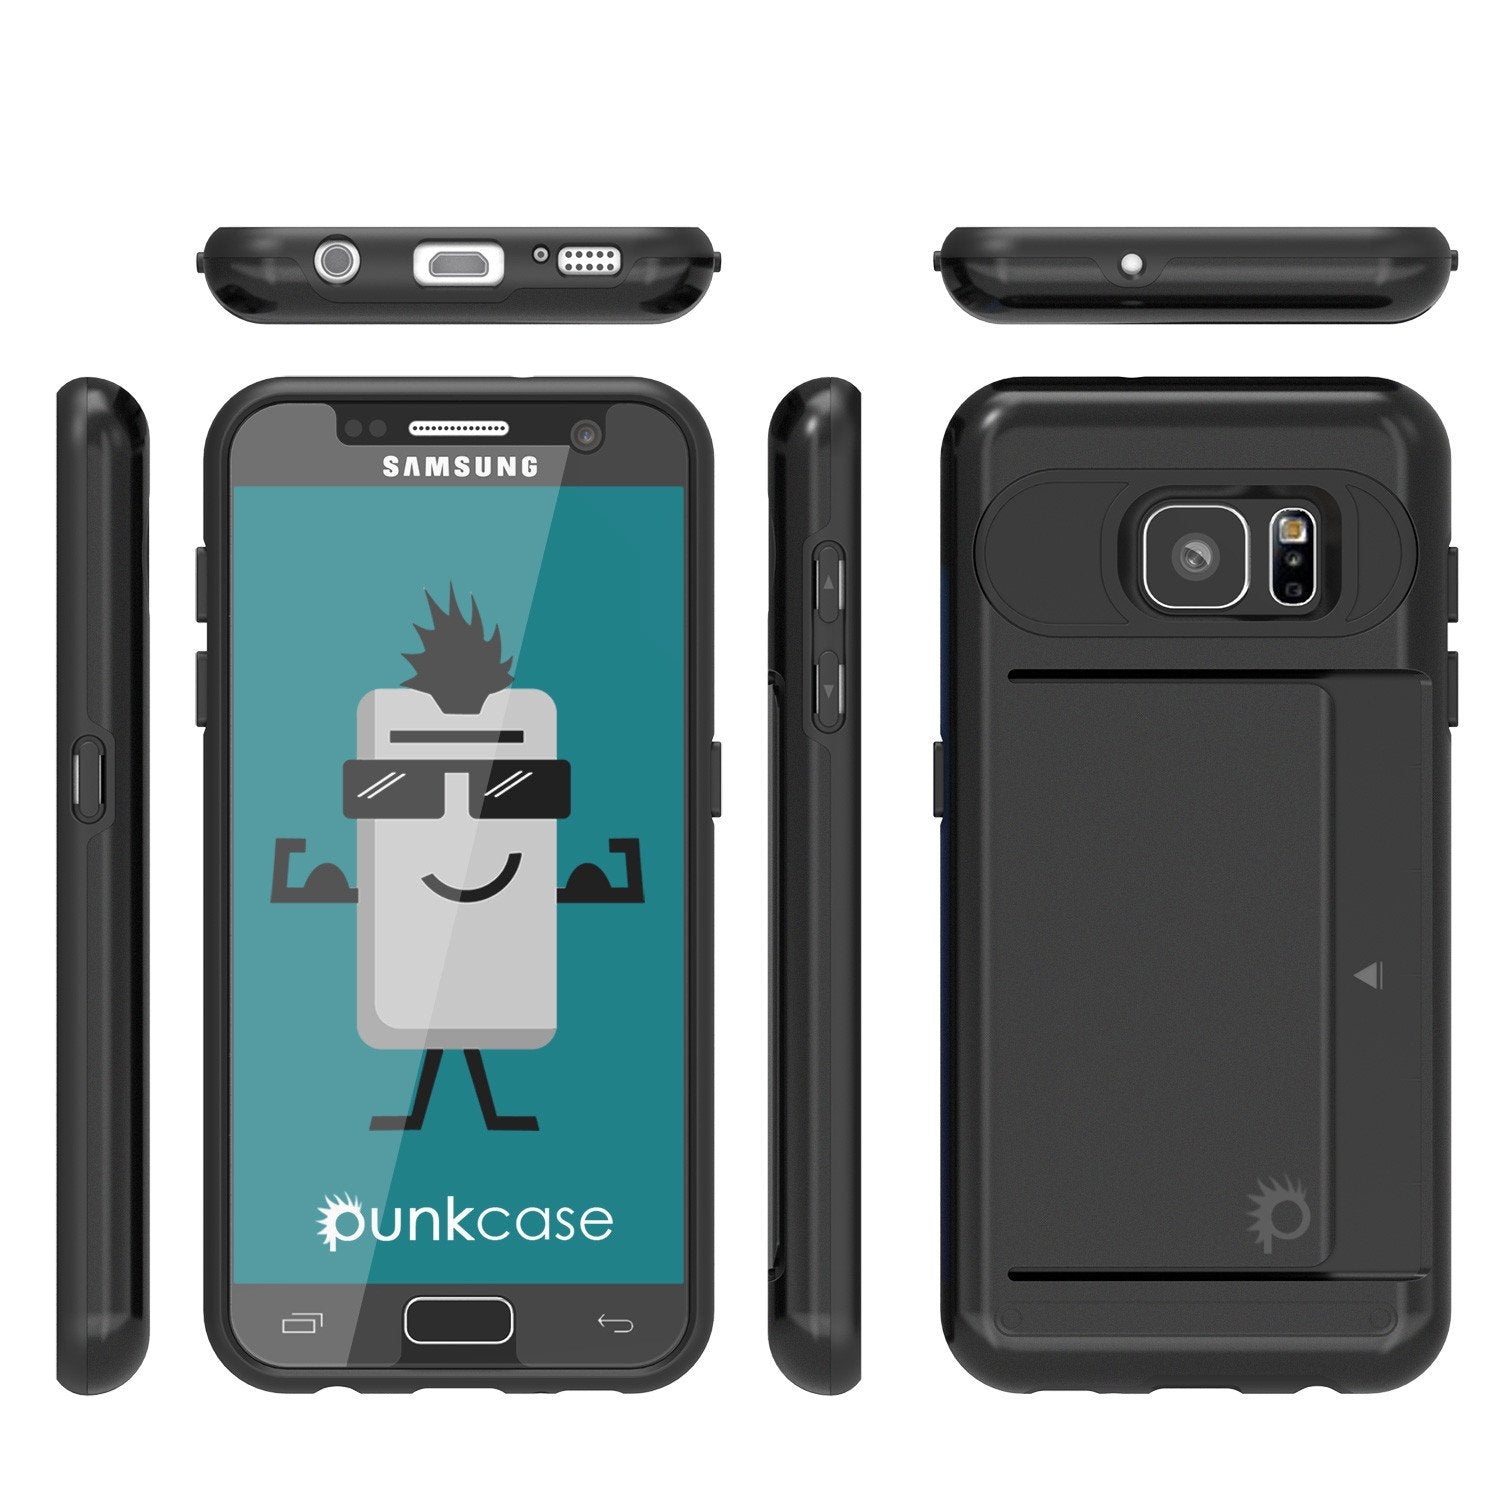 Galaxy s7 Case PunkCase CLUTCH Black Series Slim Armor Soft Cover Case w/ Tempered Glass - PunkCase NZ